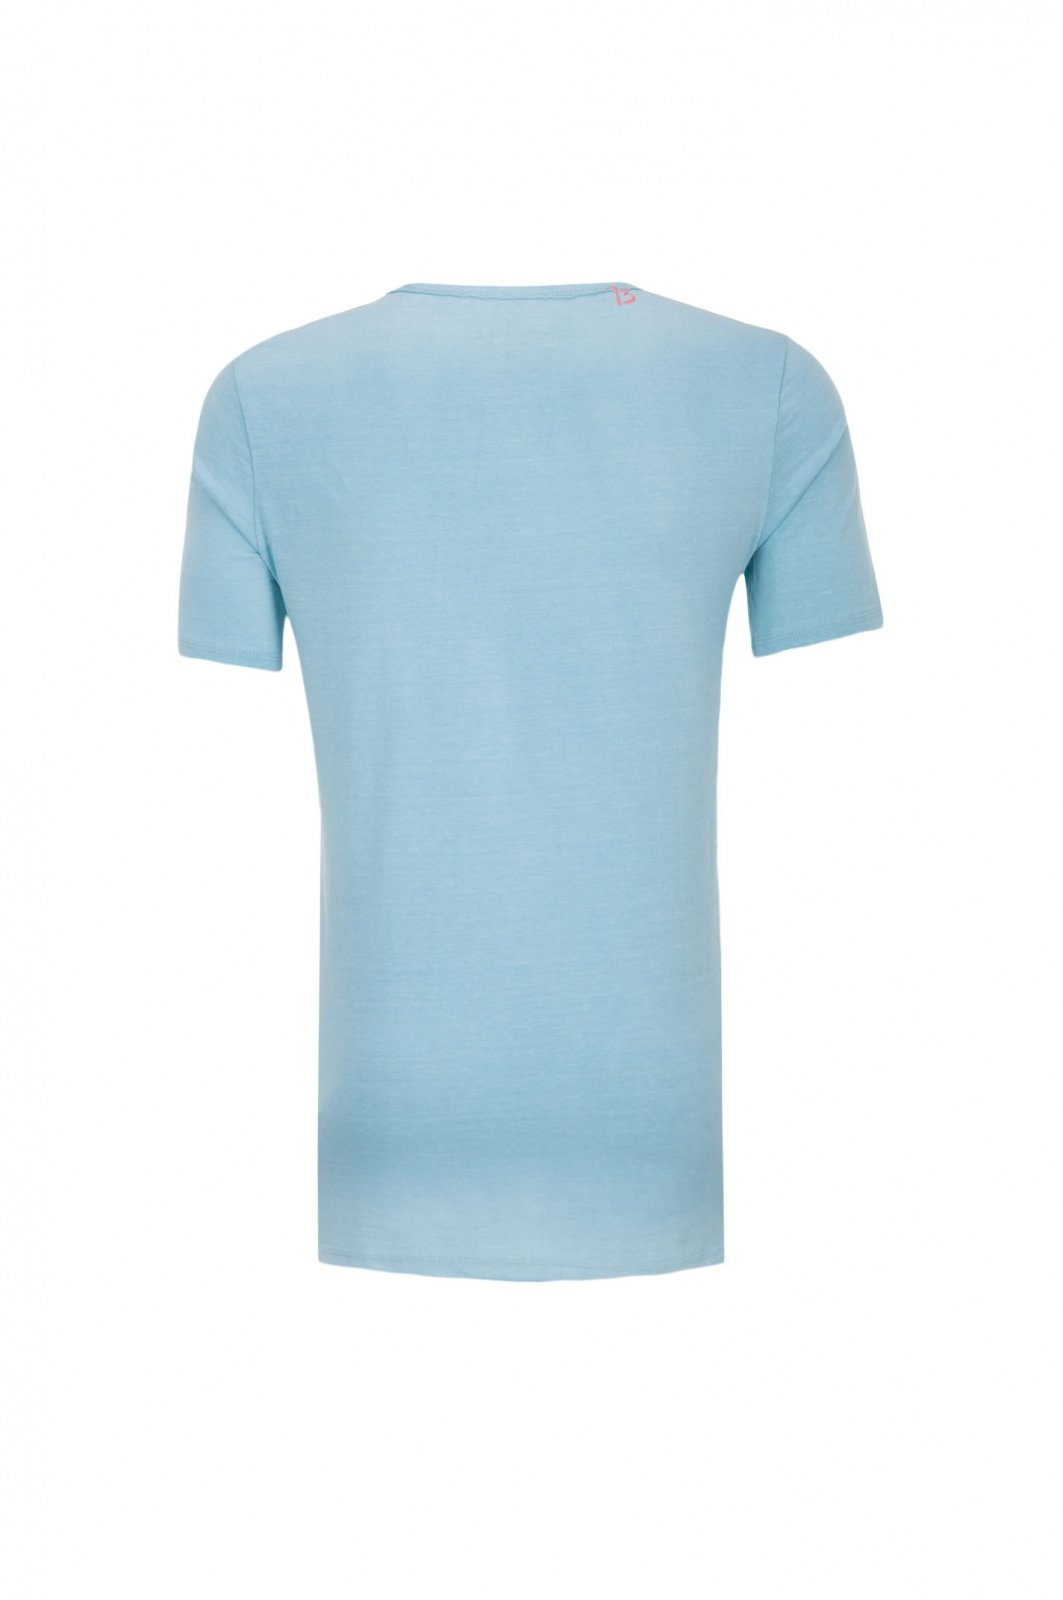 Pepe Woodford Oh No Print Men's T-Shirt - Light Blue